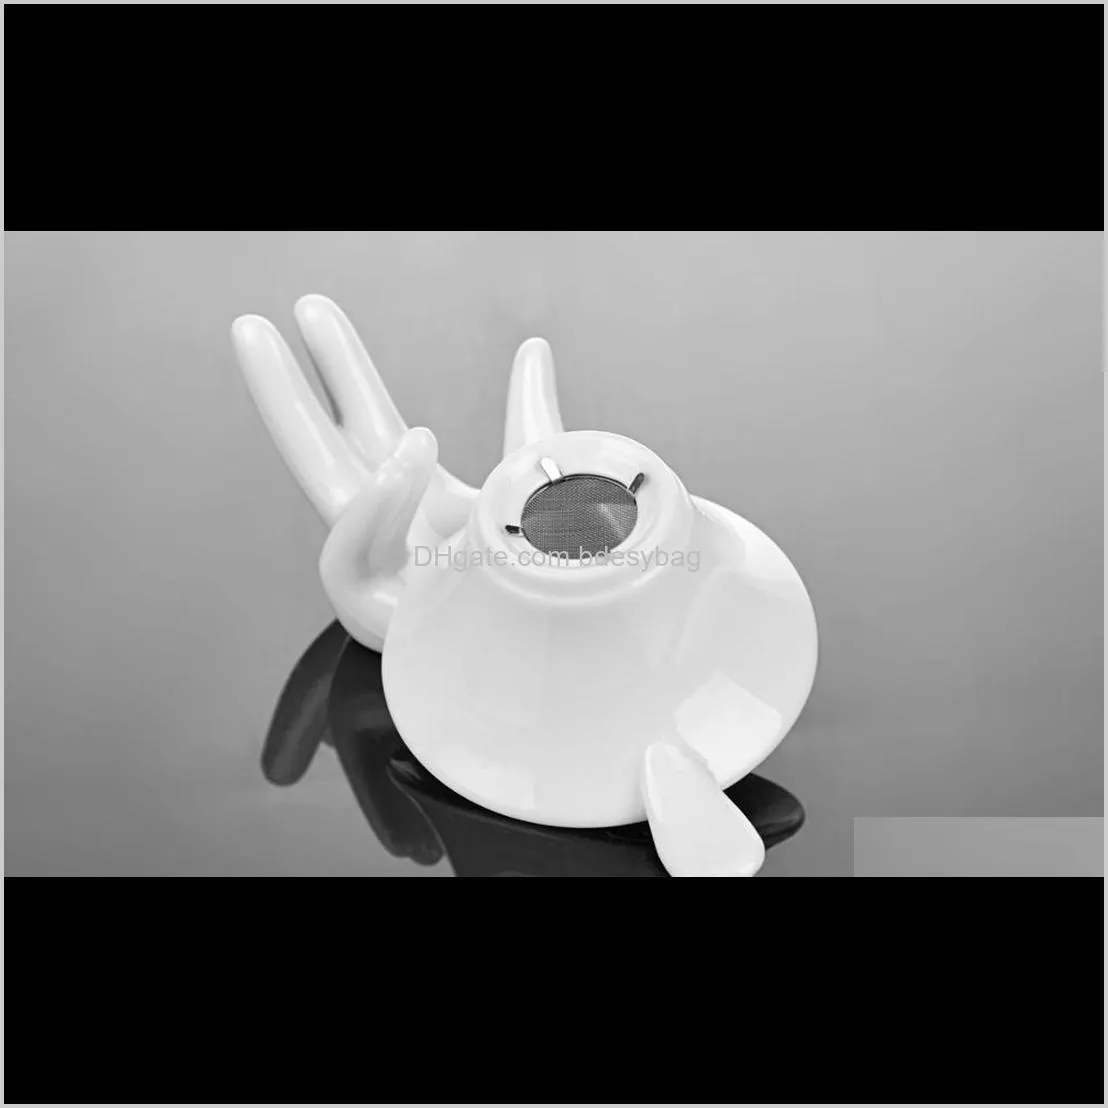 white porcelain fine mesh kungfu tea funnel strainer filter with holder stand